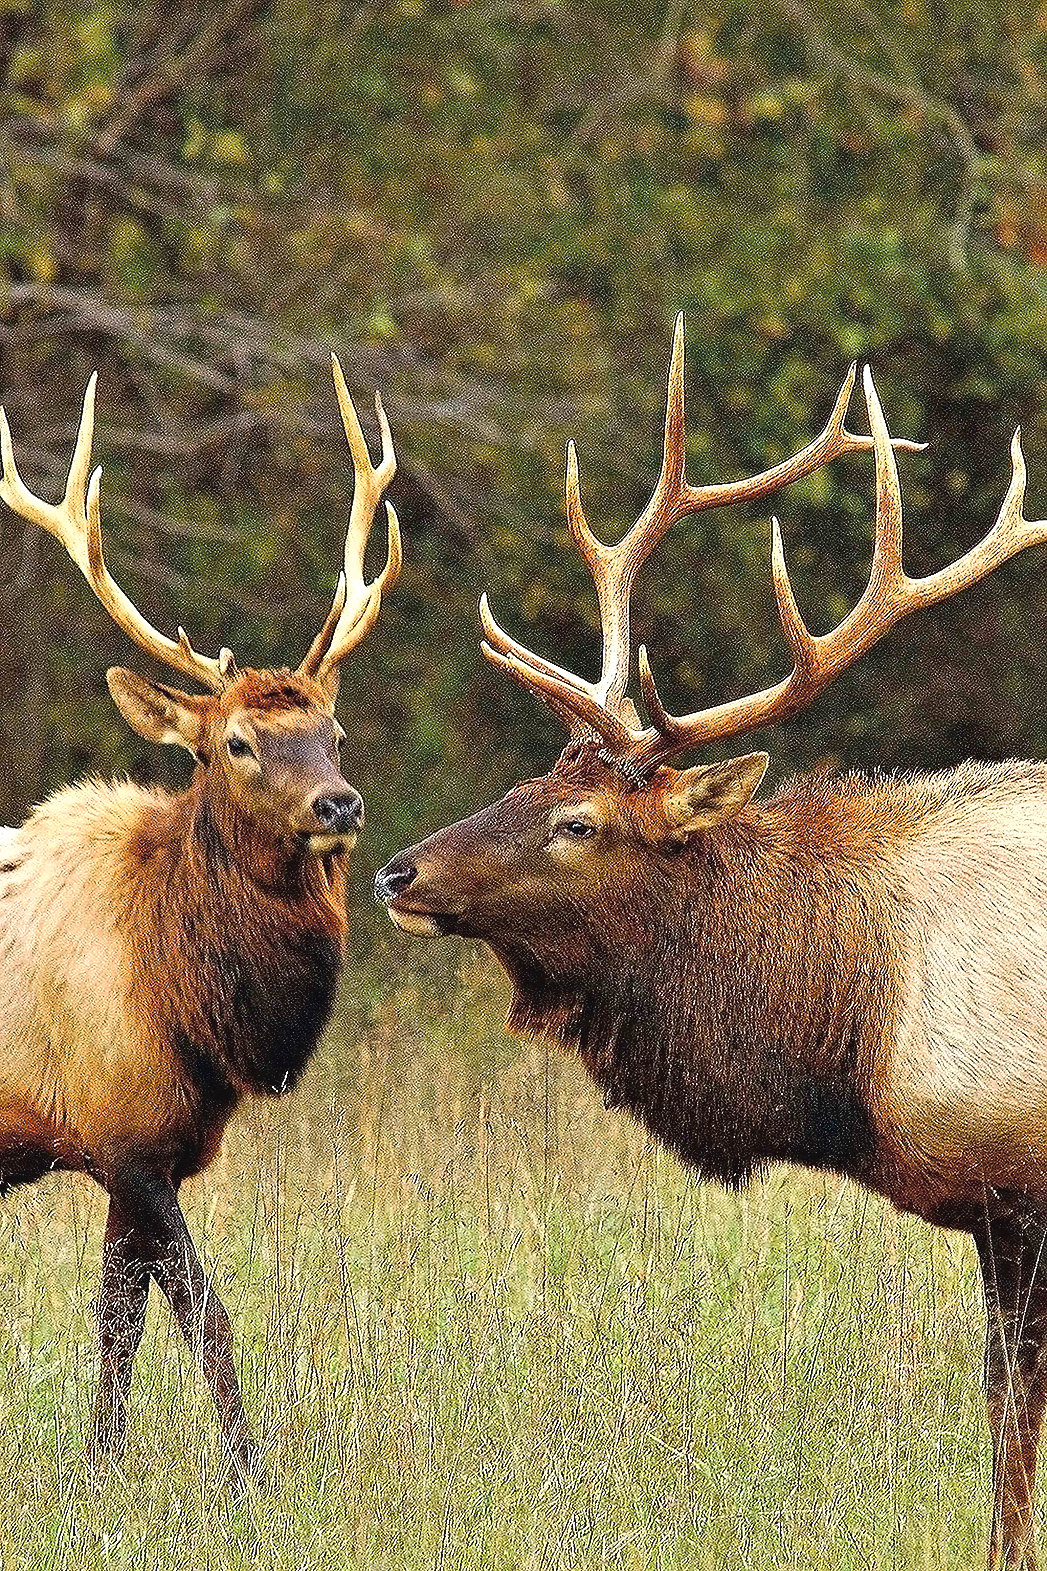 The Buffalo River Elk Festival this weekend in Jasper is